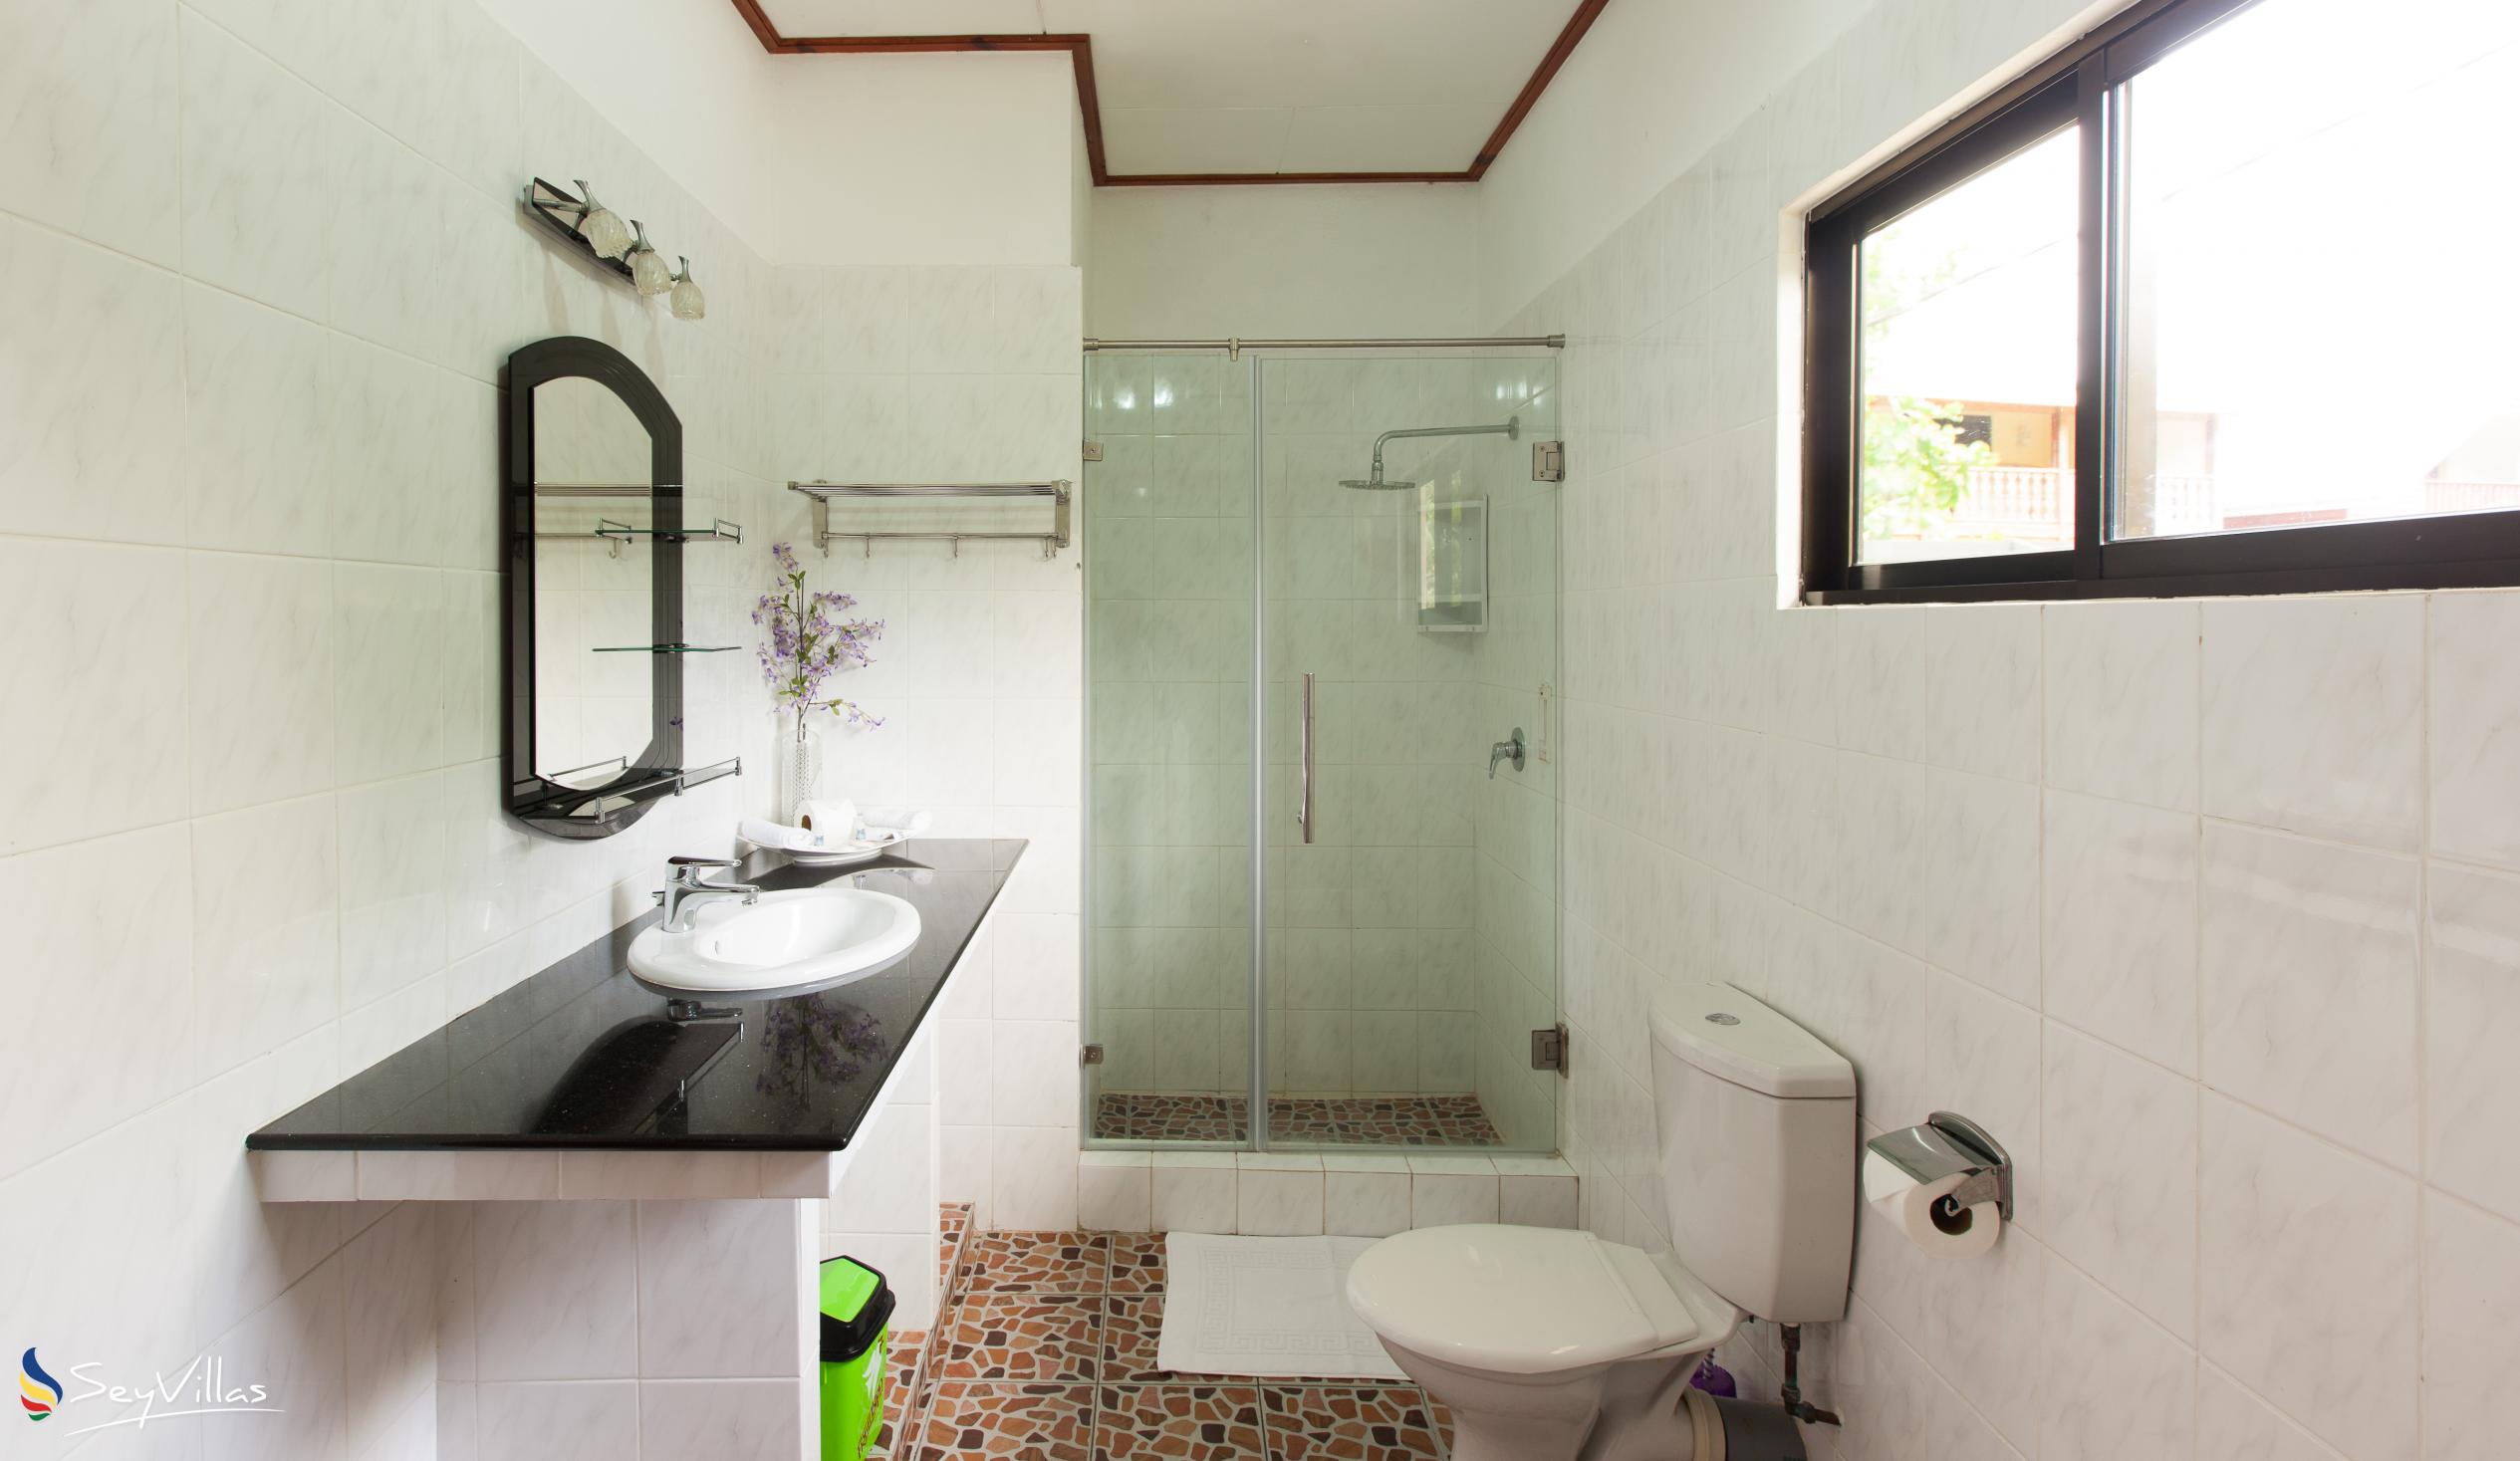 Photo 25: Orchid Self Catering Apartment - Standard Apartment - La Digue (Seychelles)